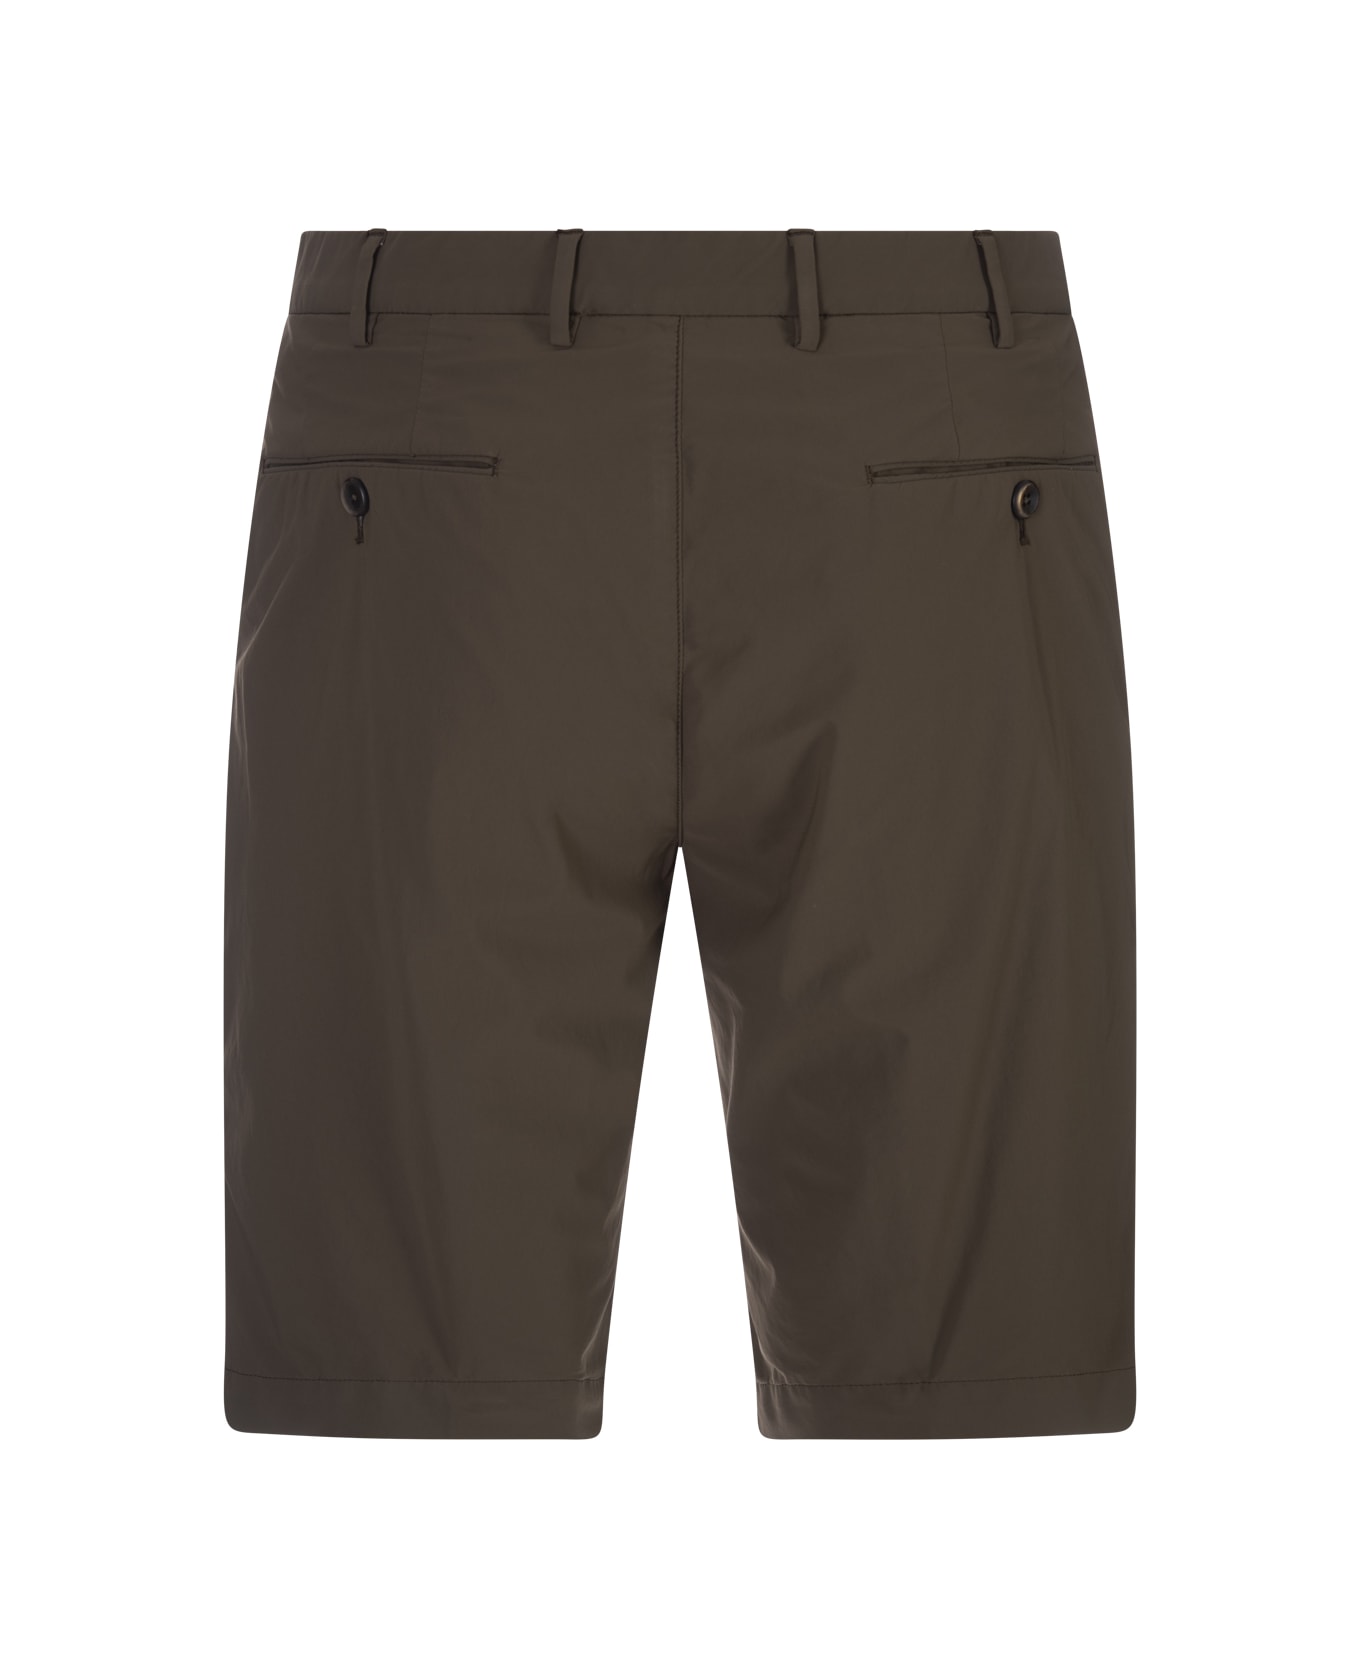 PT Torino Brown Stretch Cotton Shorts - Brown